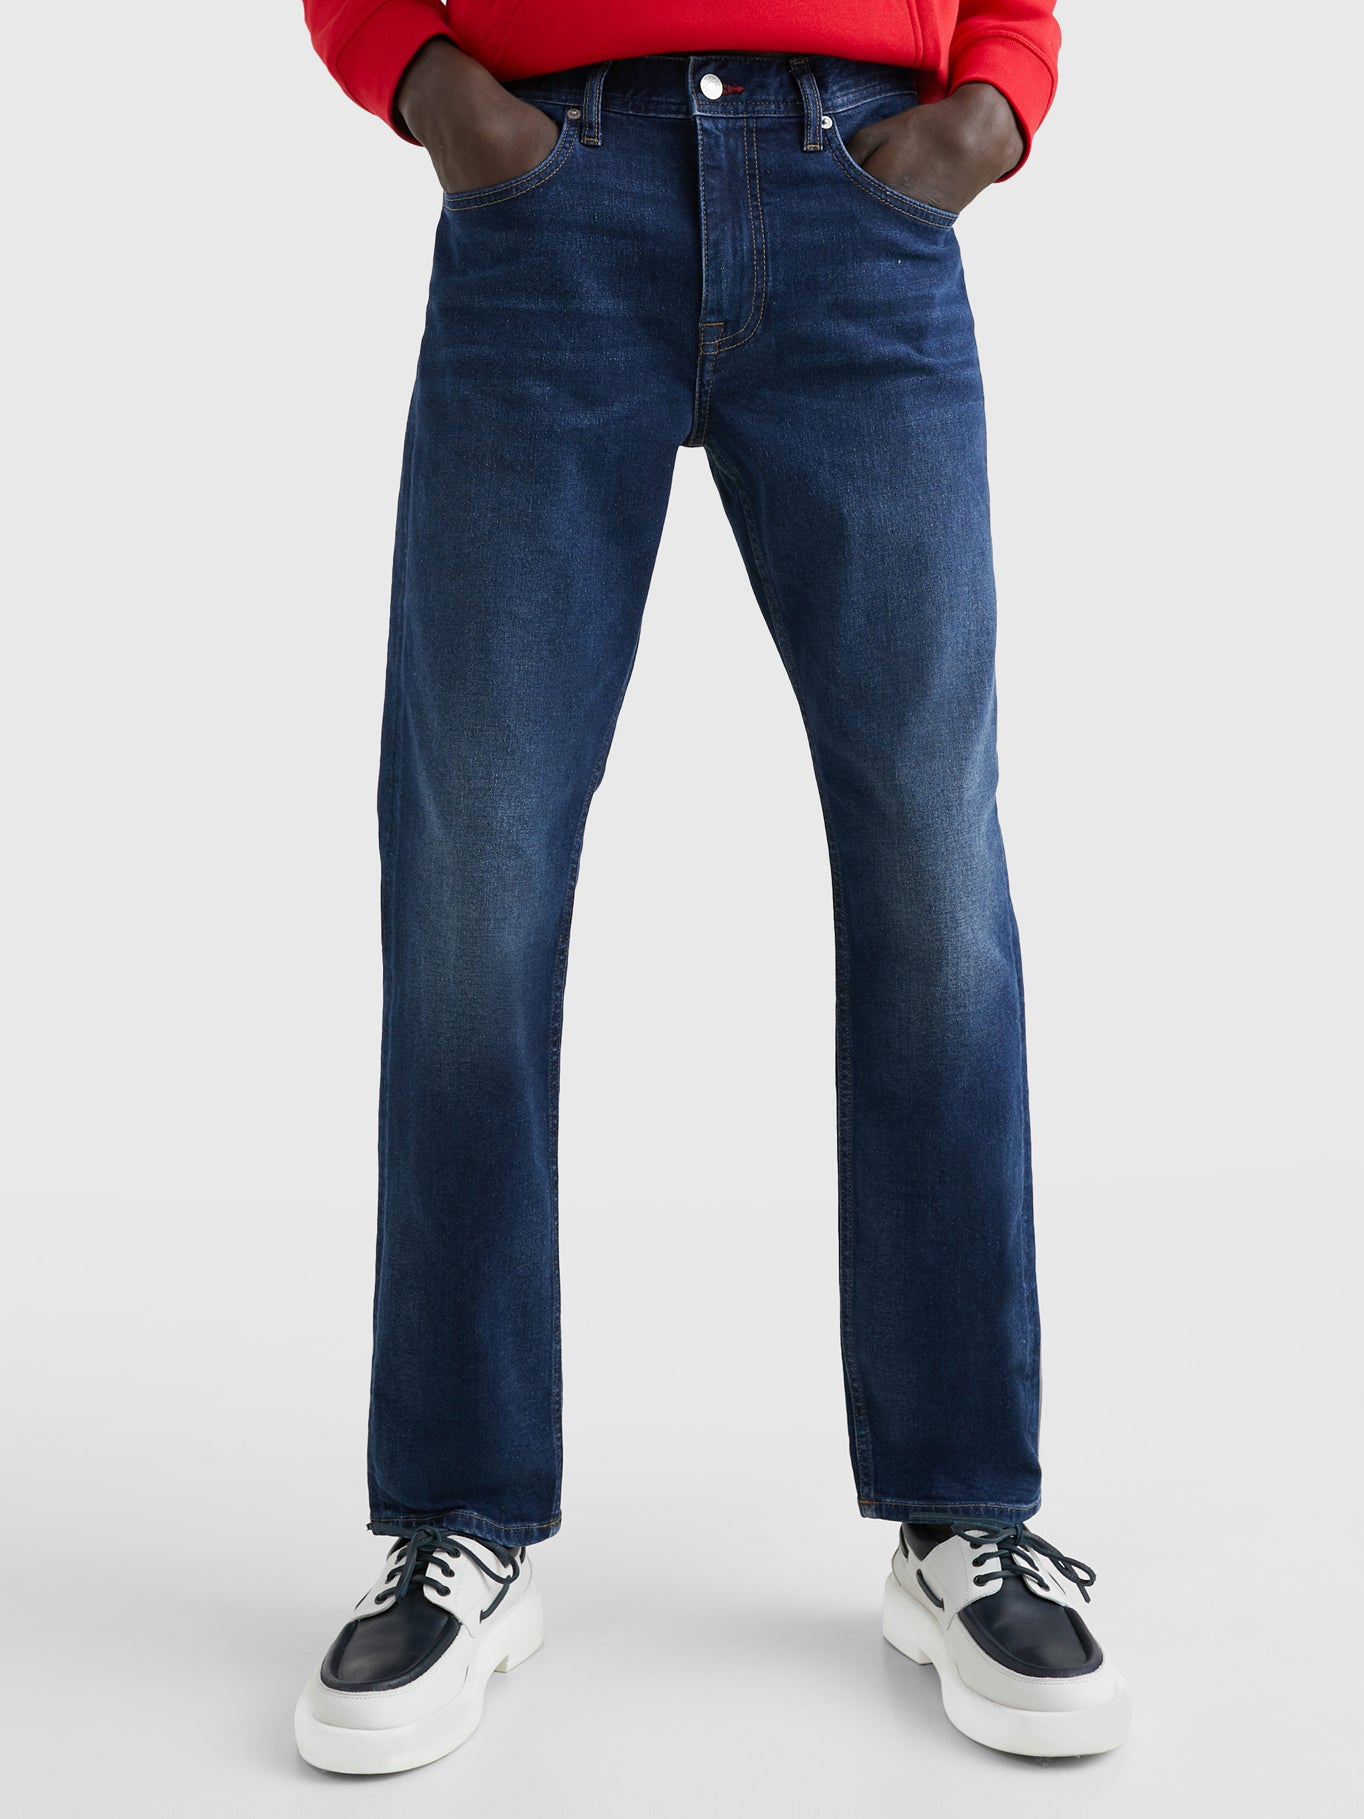 pantalon-jeans-tommy-hilfiger-p-caballeros-5